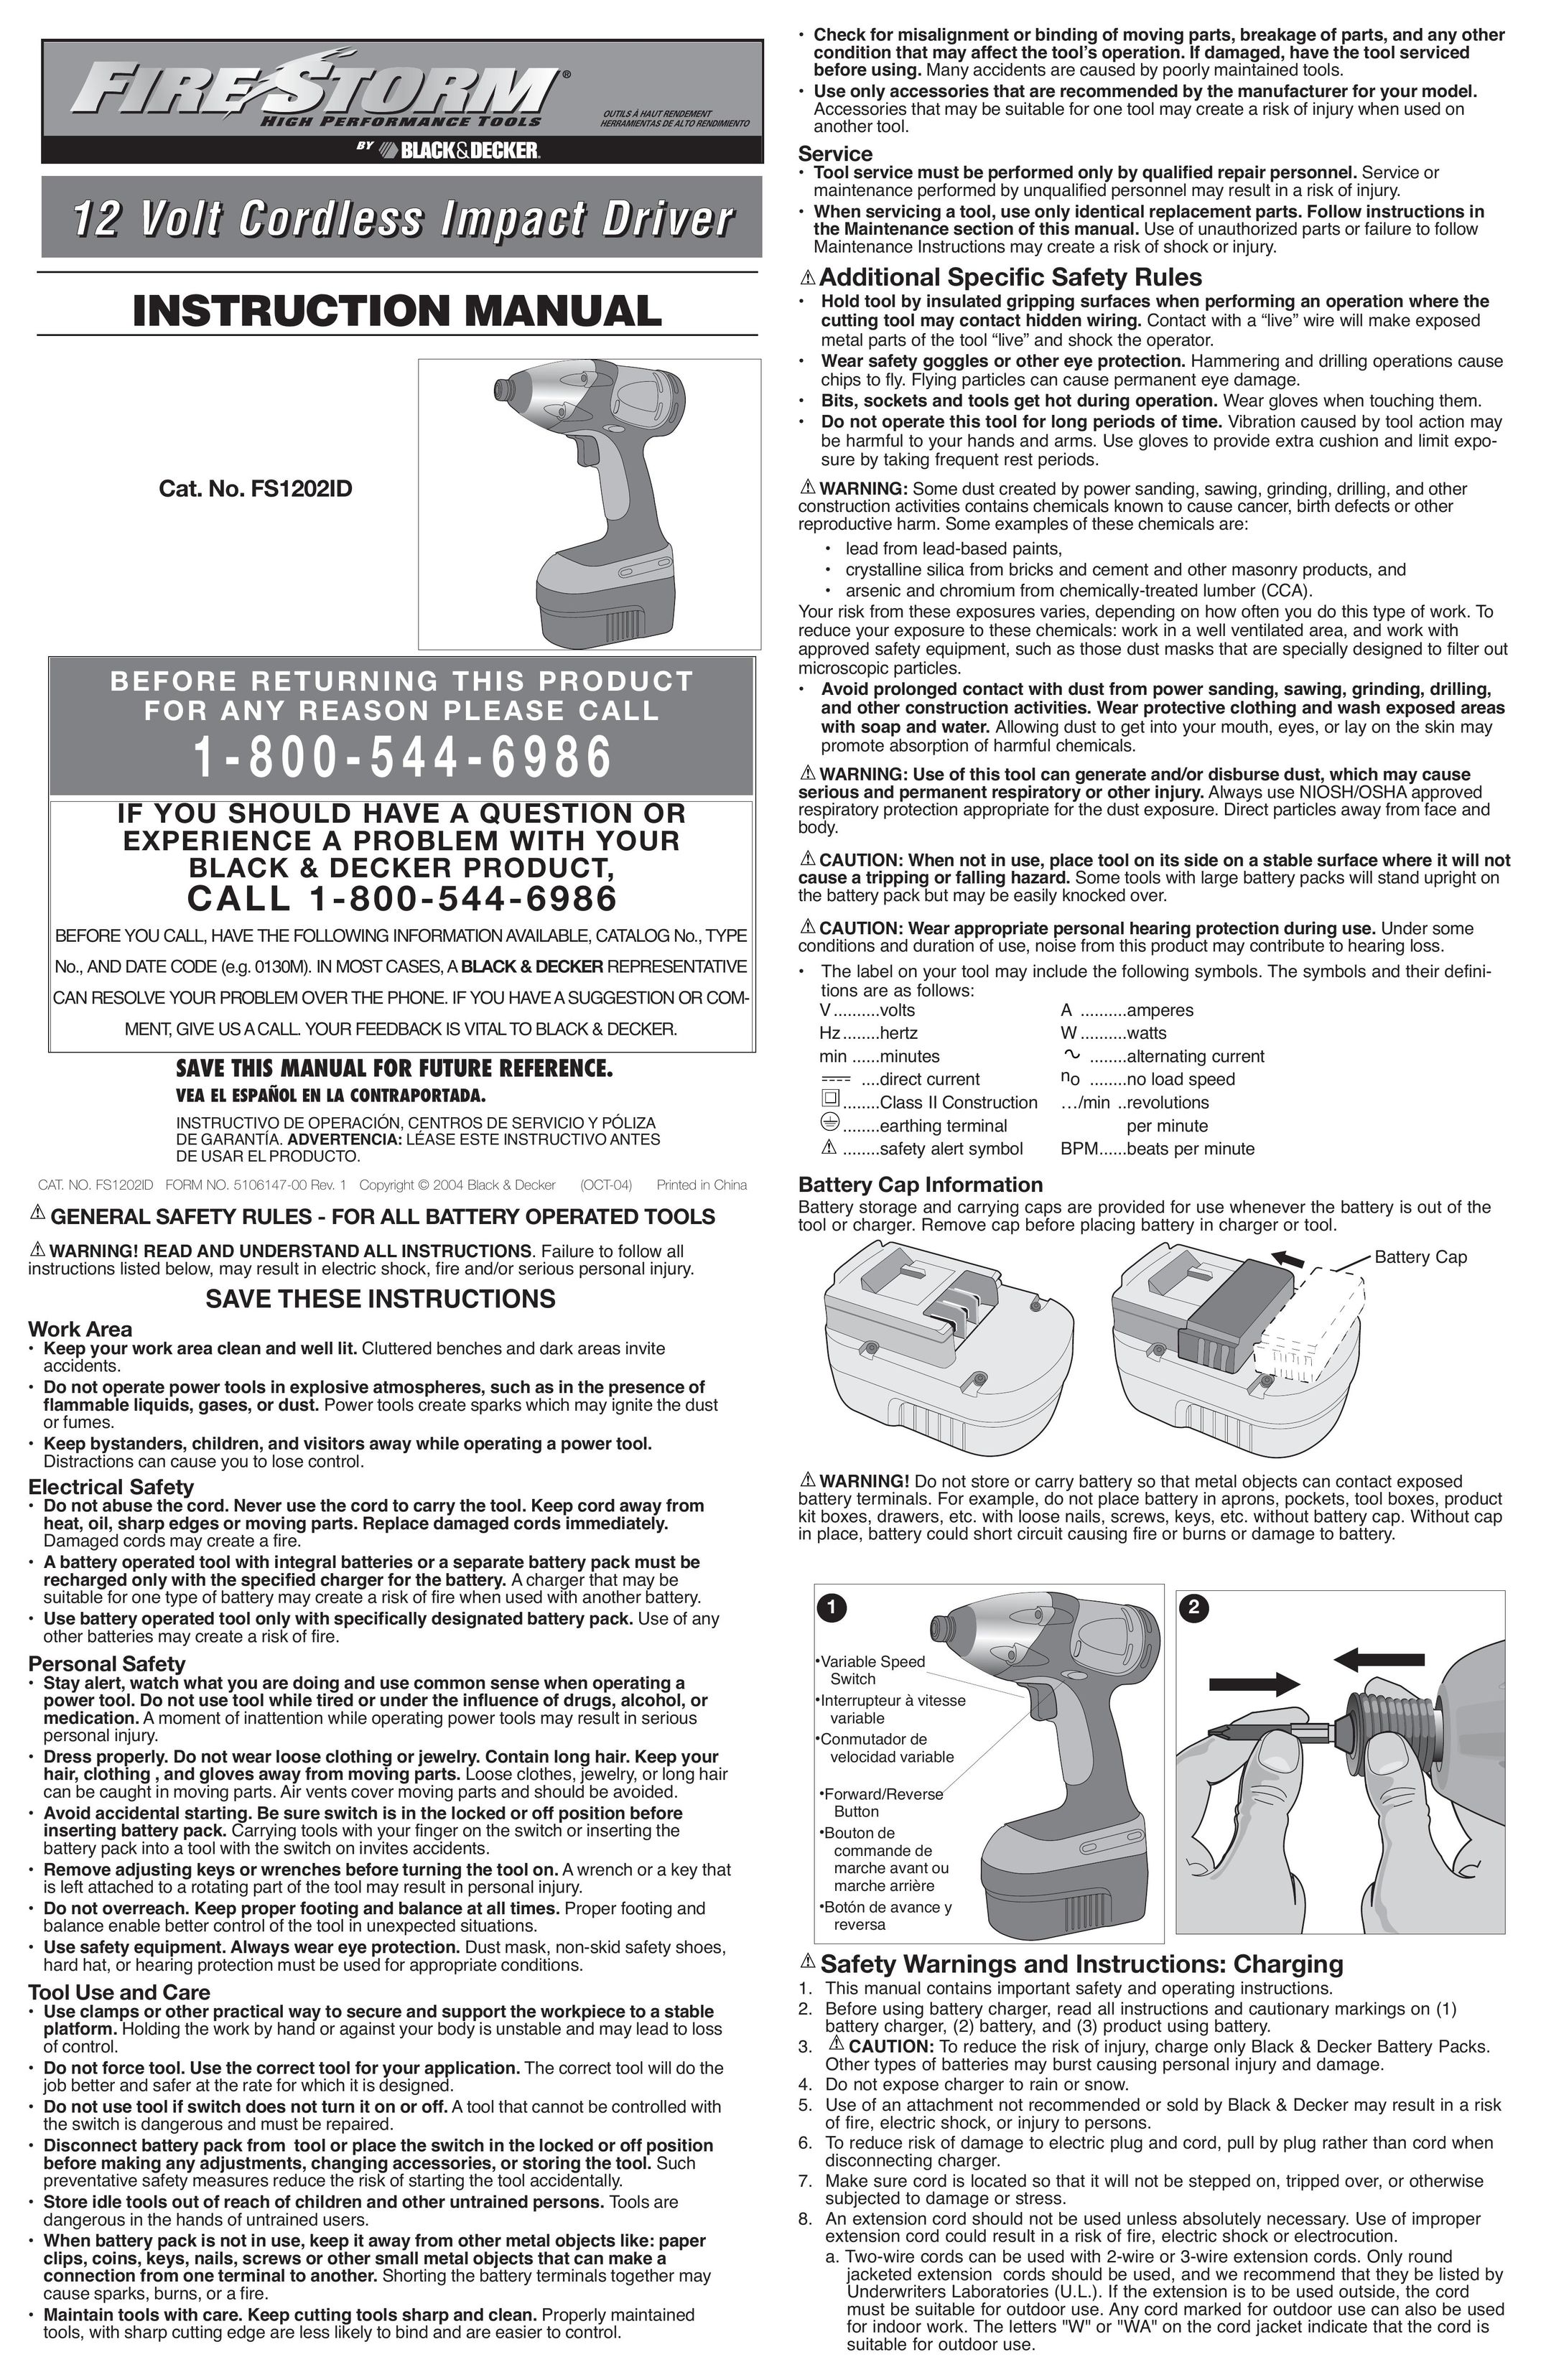 Black & Decker FS1202ID Impact Driver User Manual